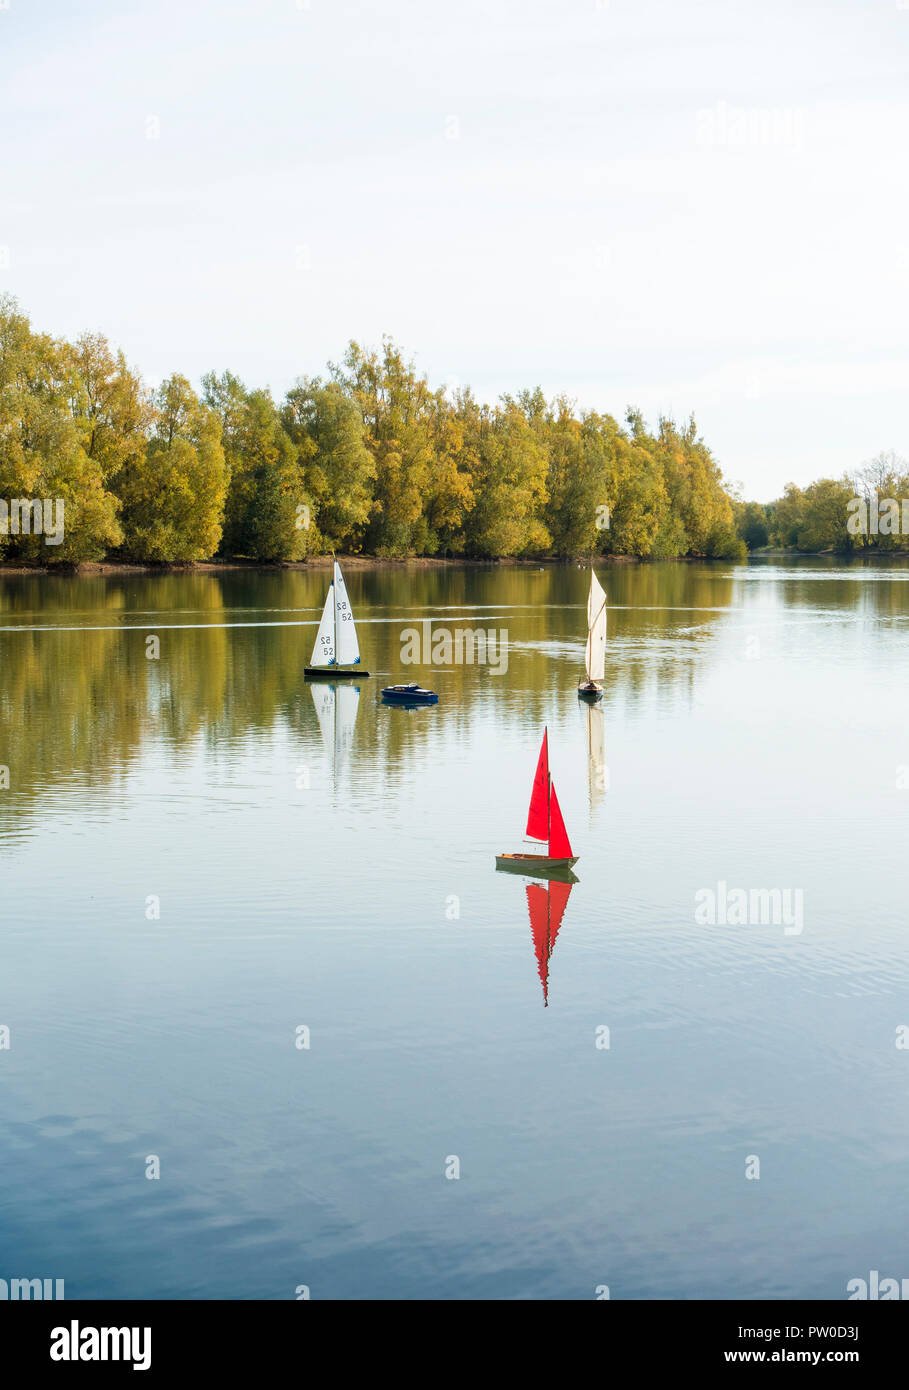 Three model sail boats on lake Stock Photo